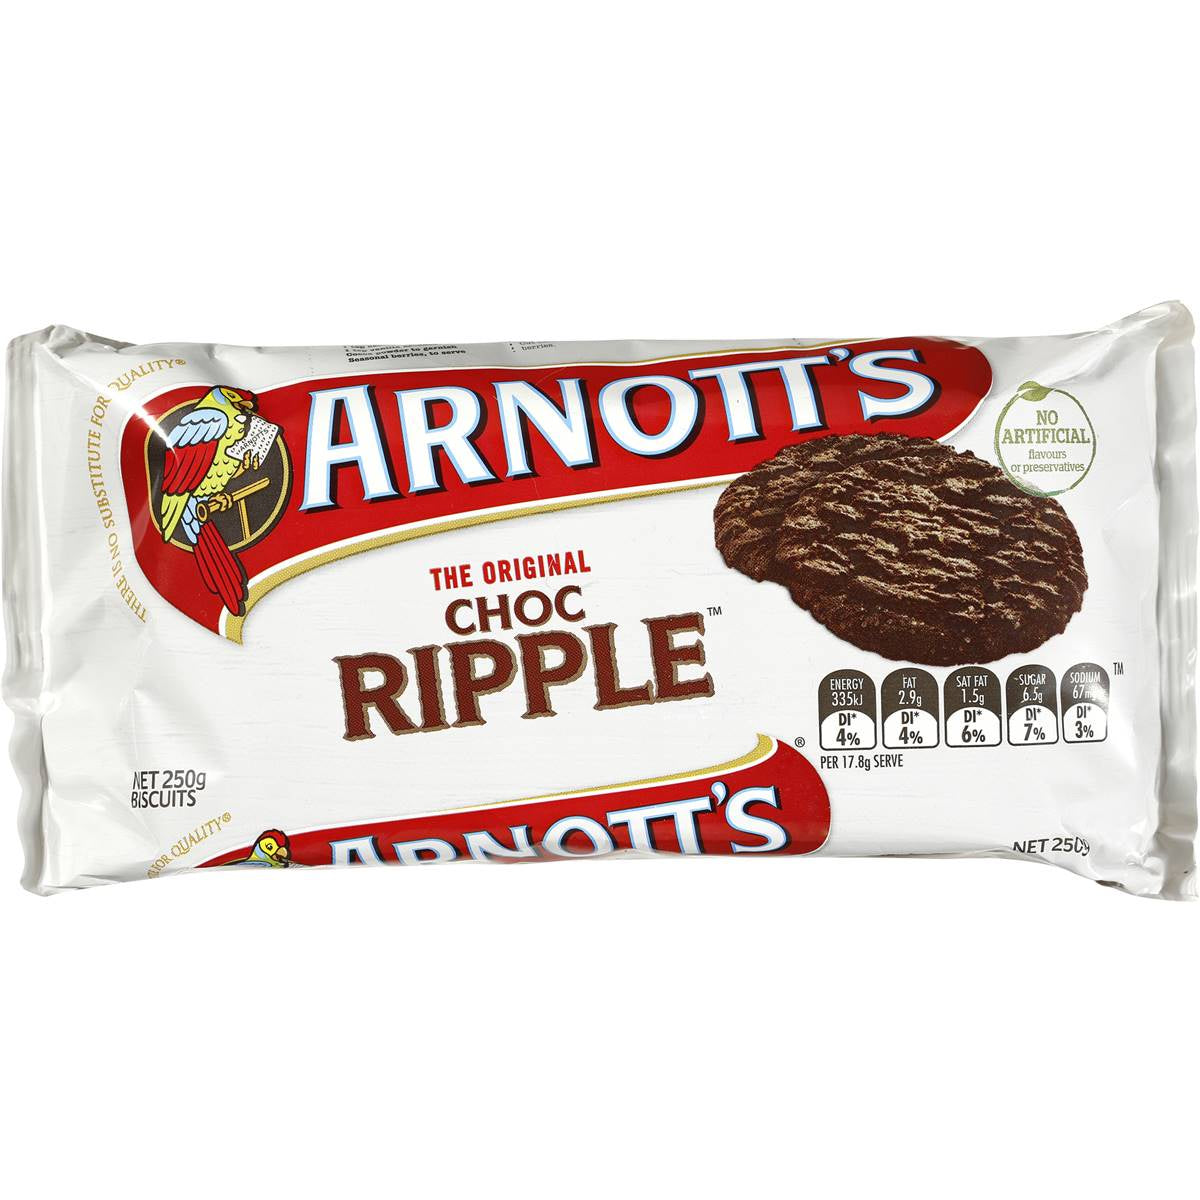 Arnotts Choc Ripple Biscuits 250g **